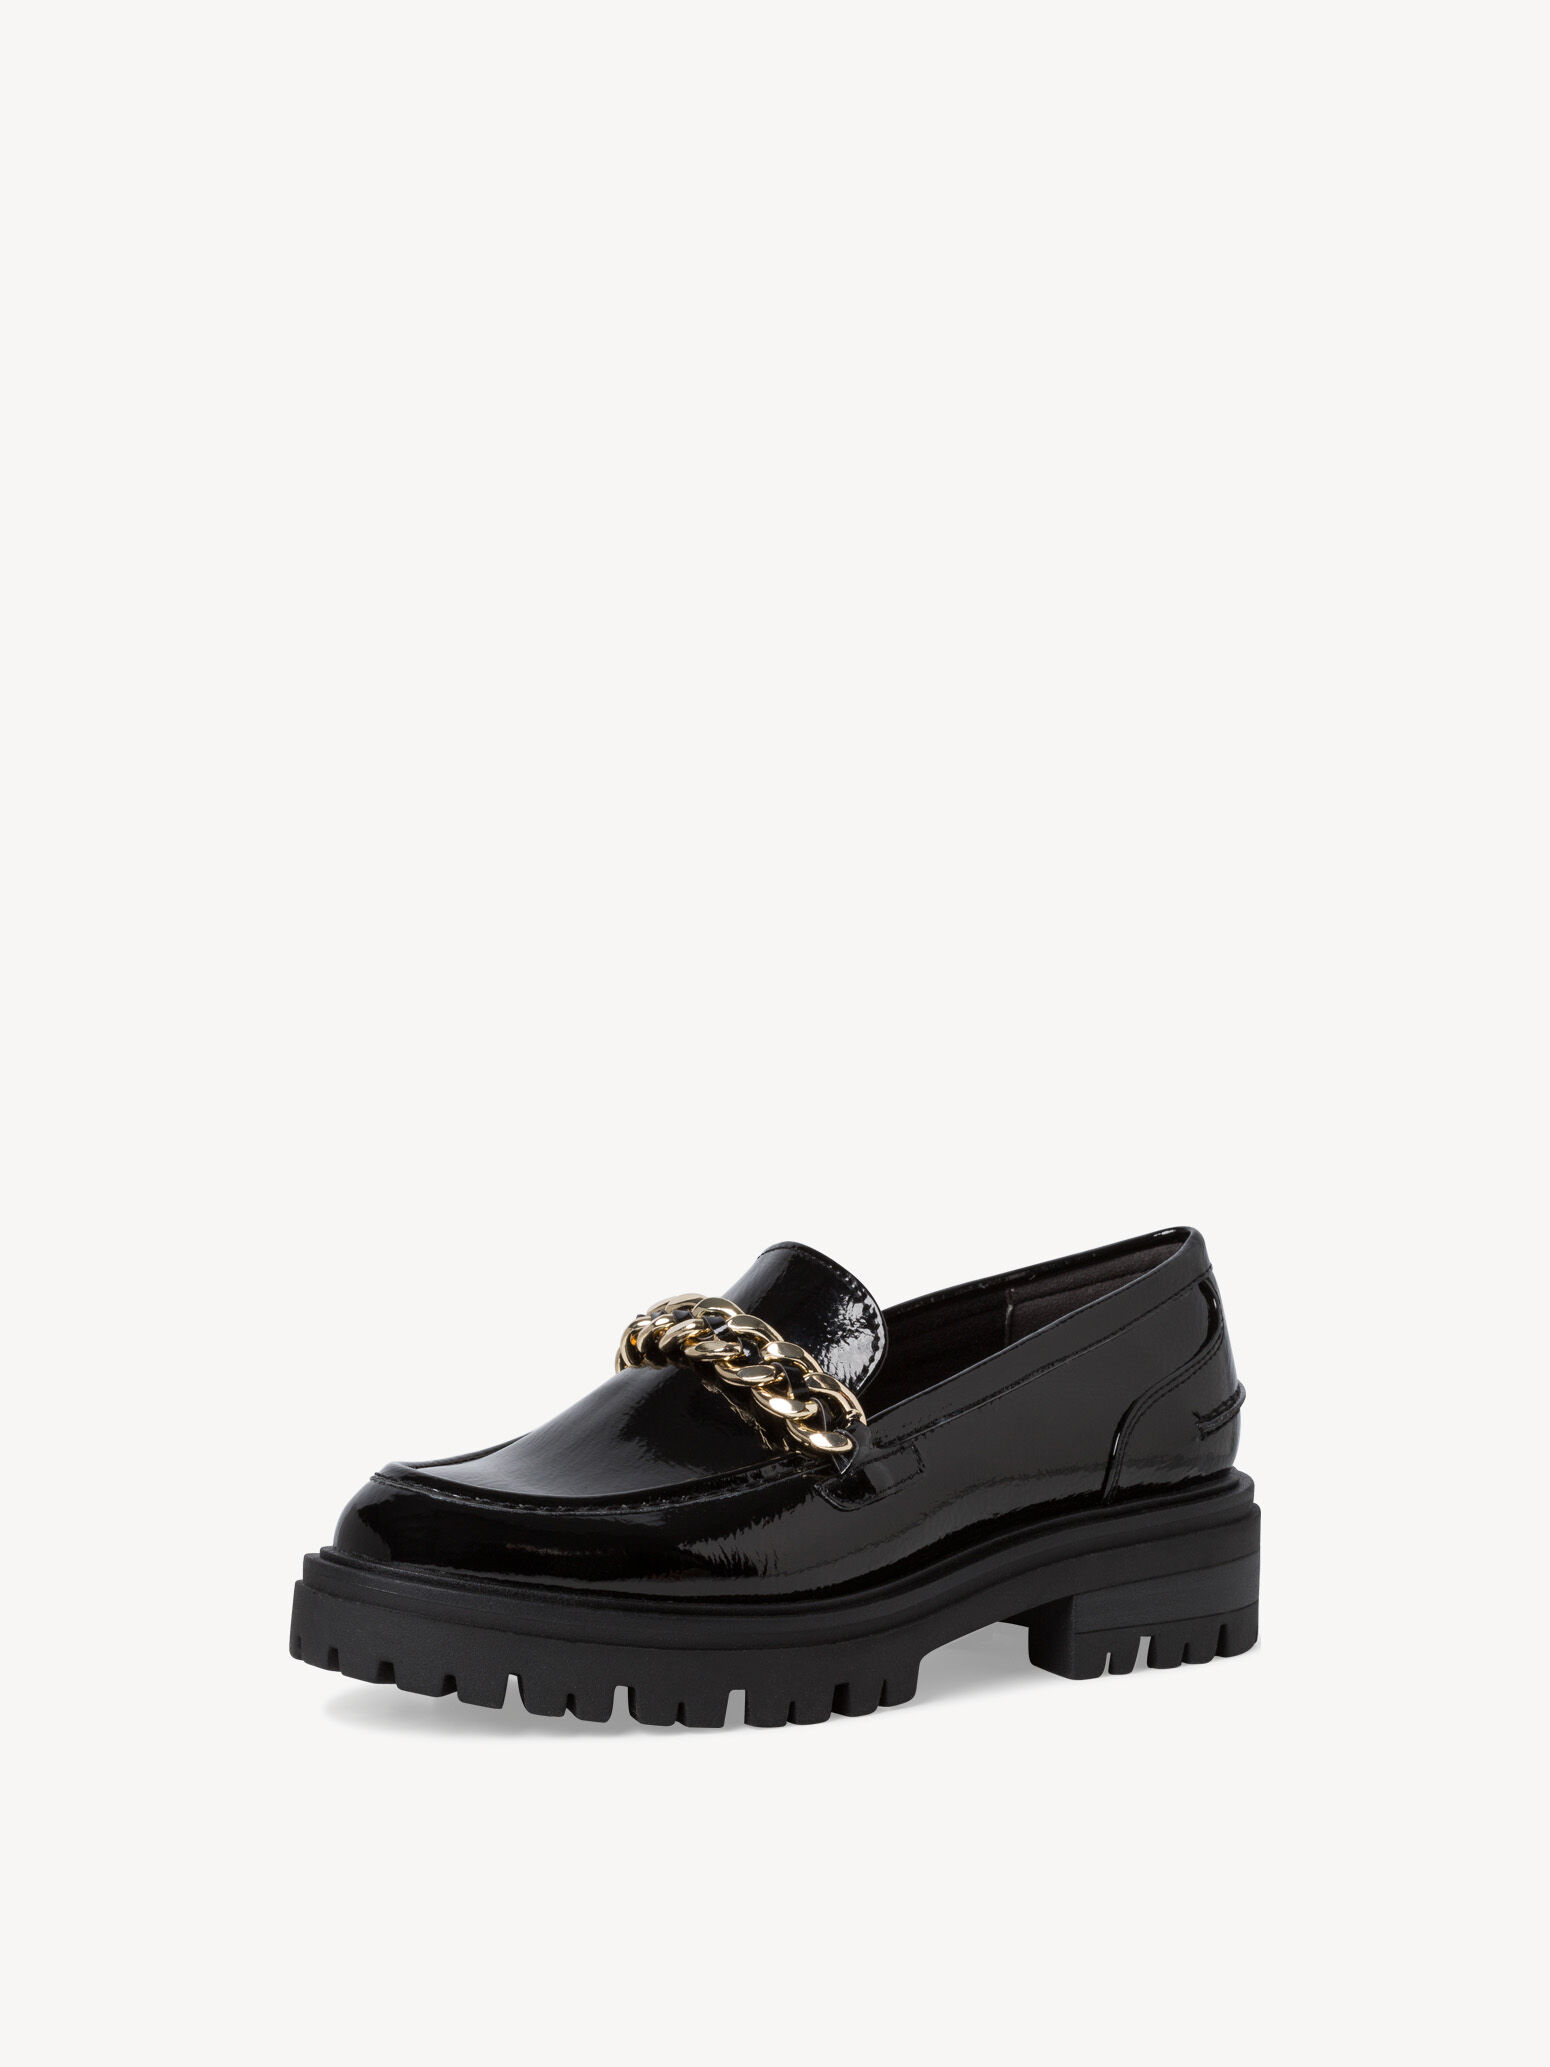 butik social Utallige Slipper 1-1-24701-27: Buy Tamaris Low shoes online!